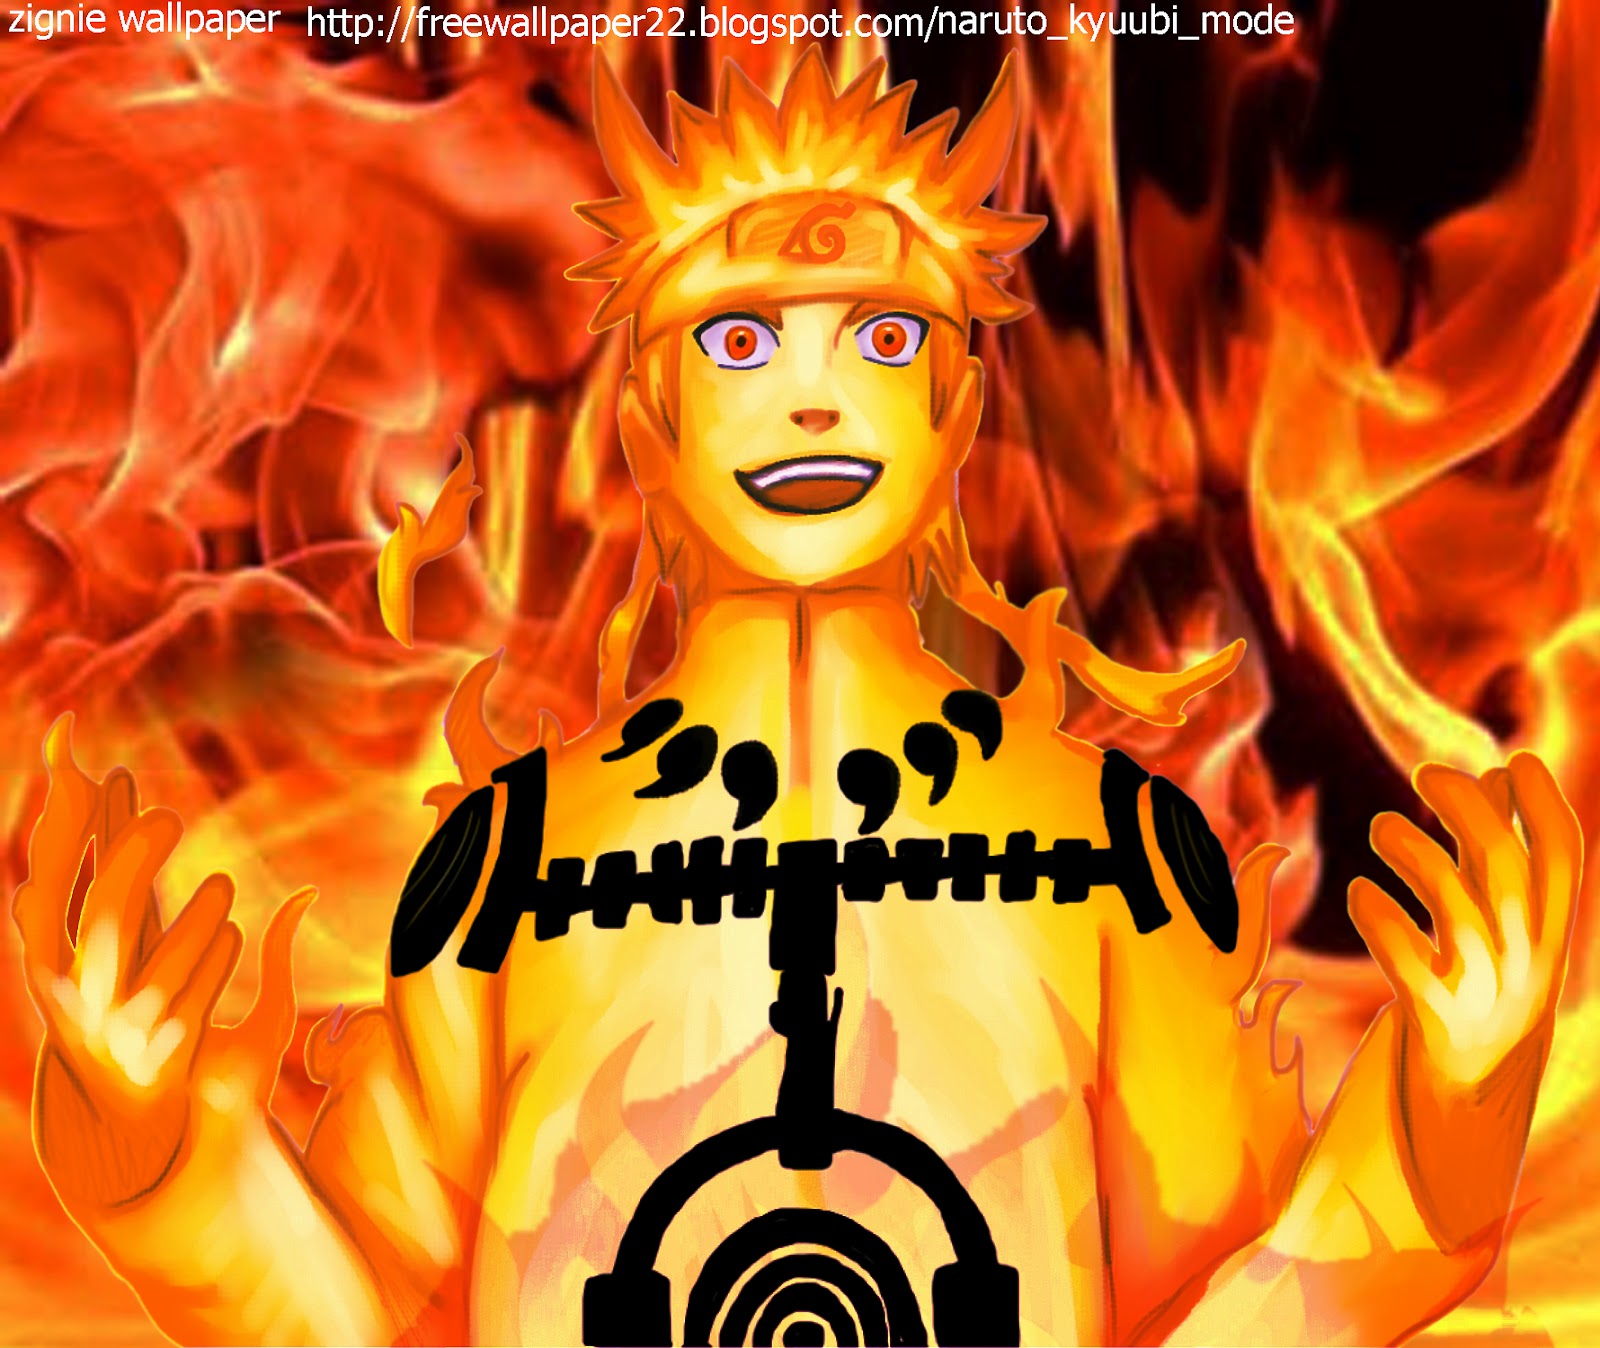 Naruto Kyuubi Mode Wallpaper